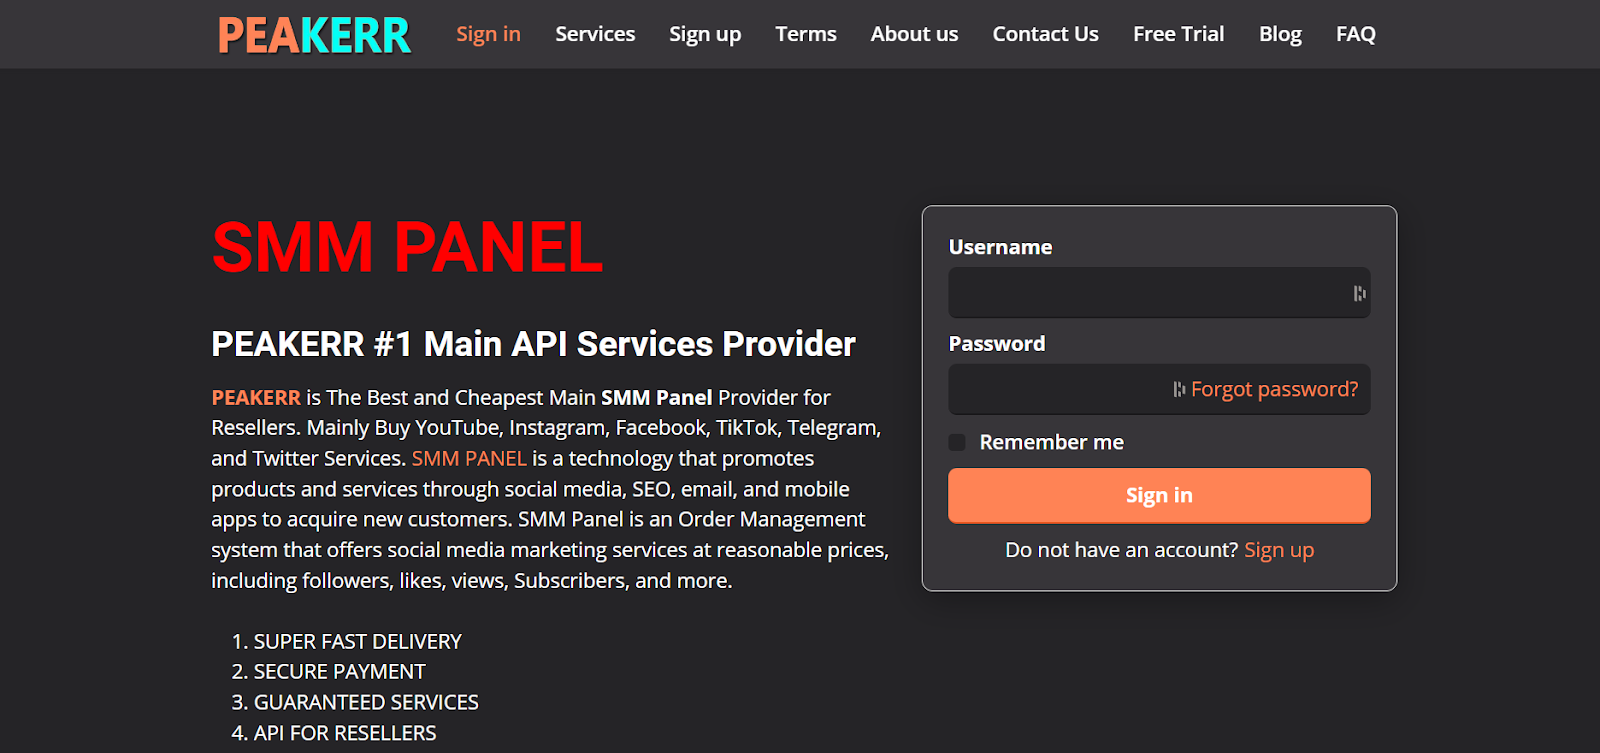 PEAKERR #1 Main API Services Provider